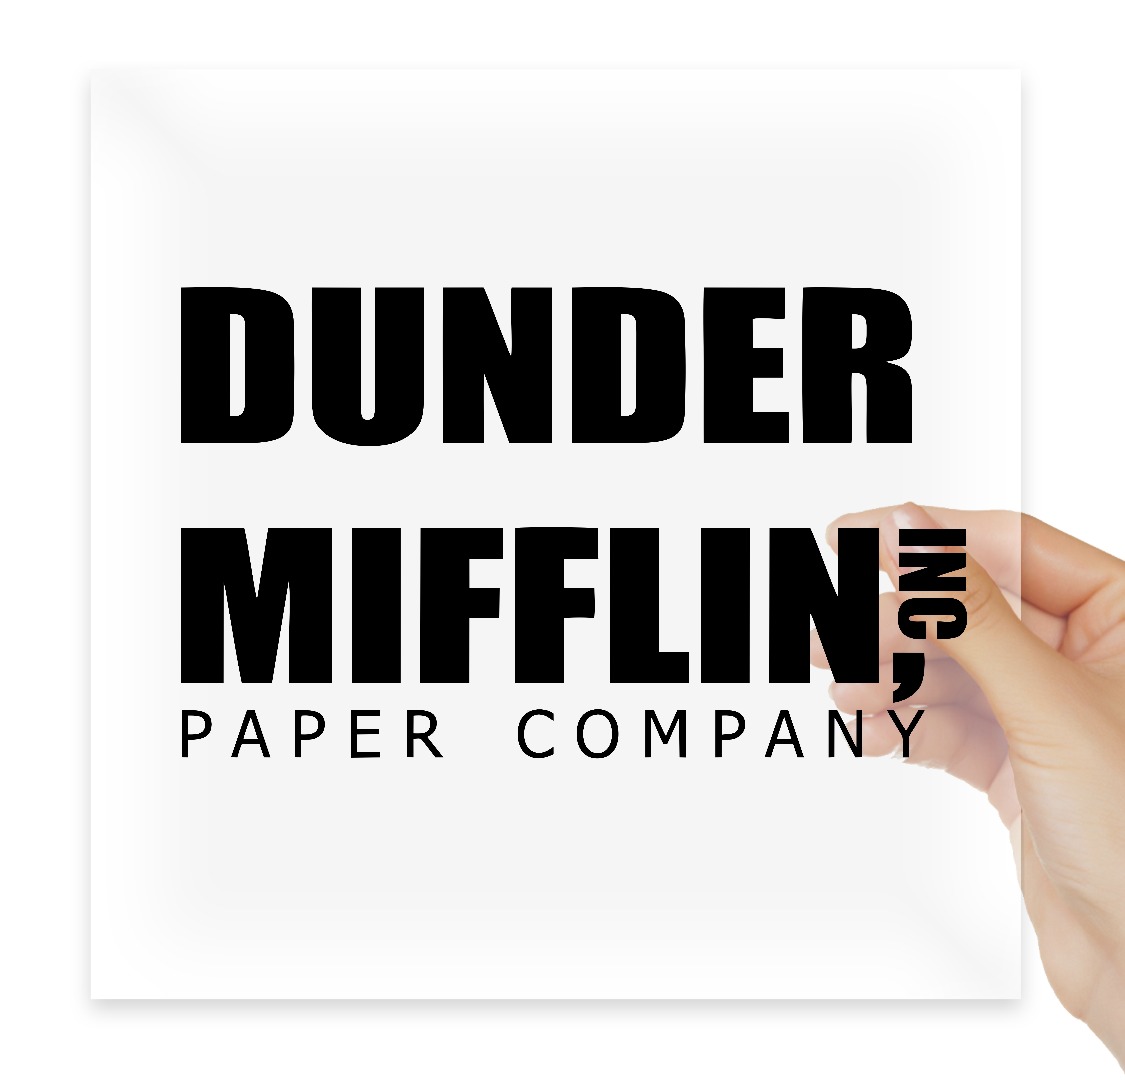 Paper companies